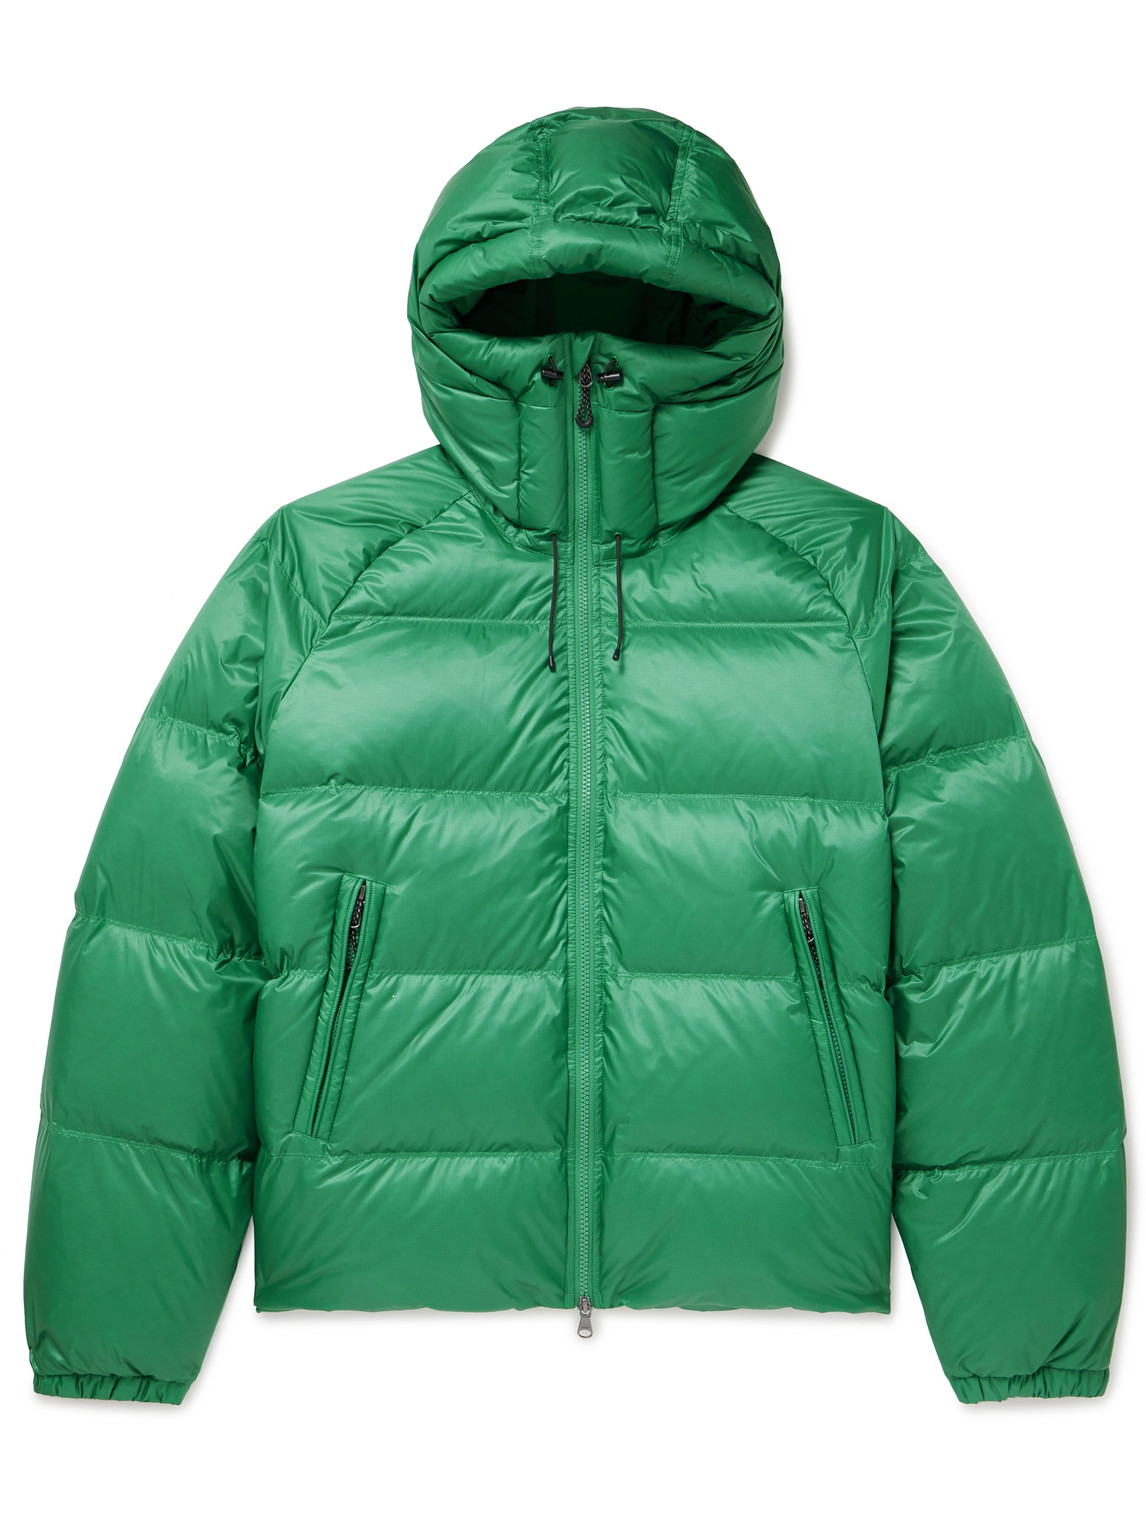 ARKET - Rubin Quilted Recycled-Ripstop Hooded Jacket - Men - Green - M von ARKET